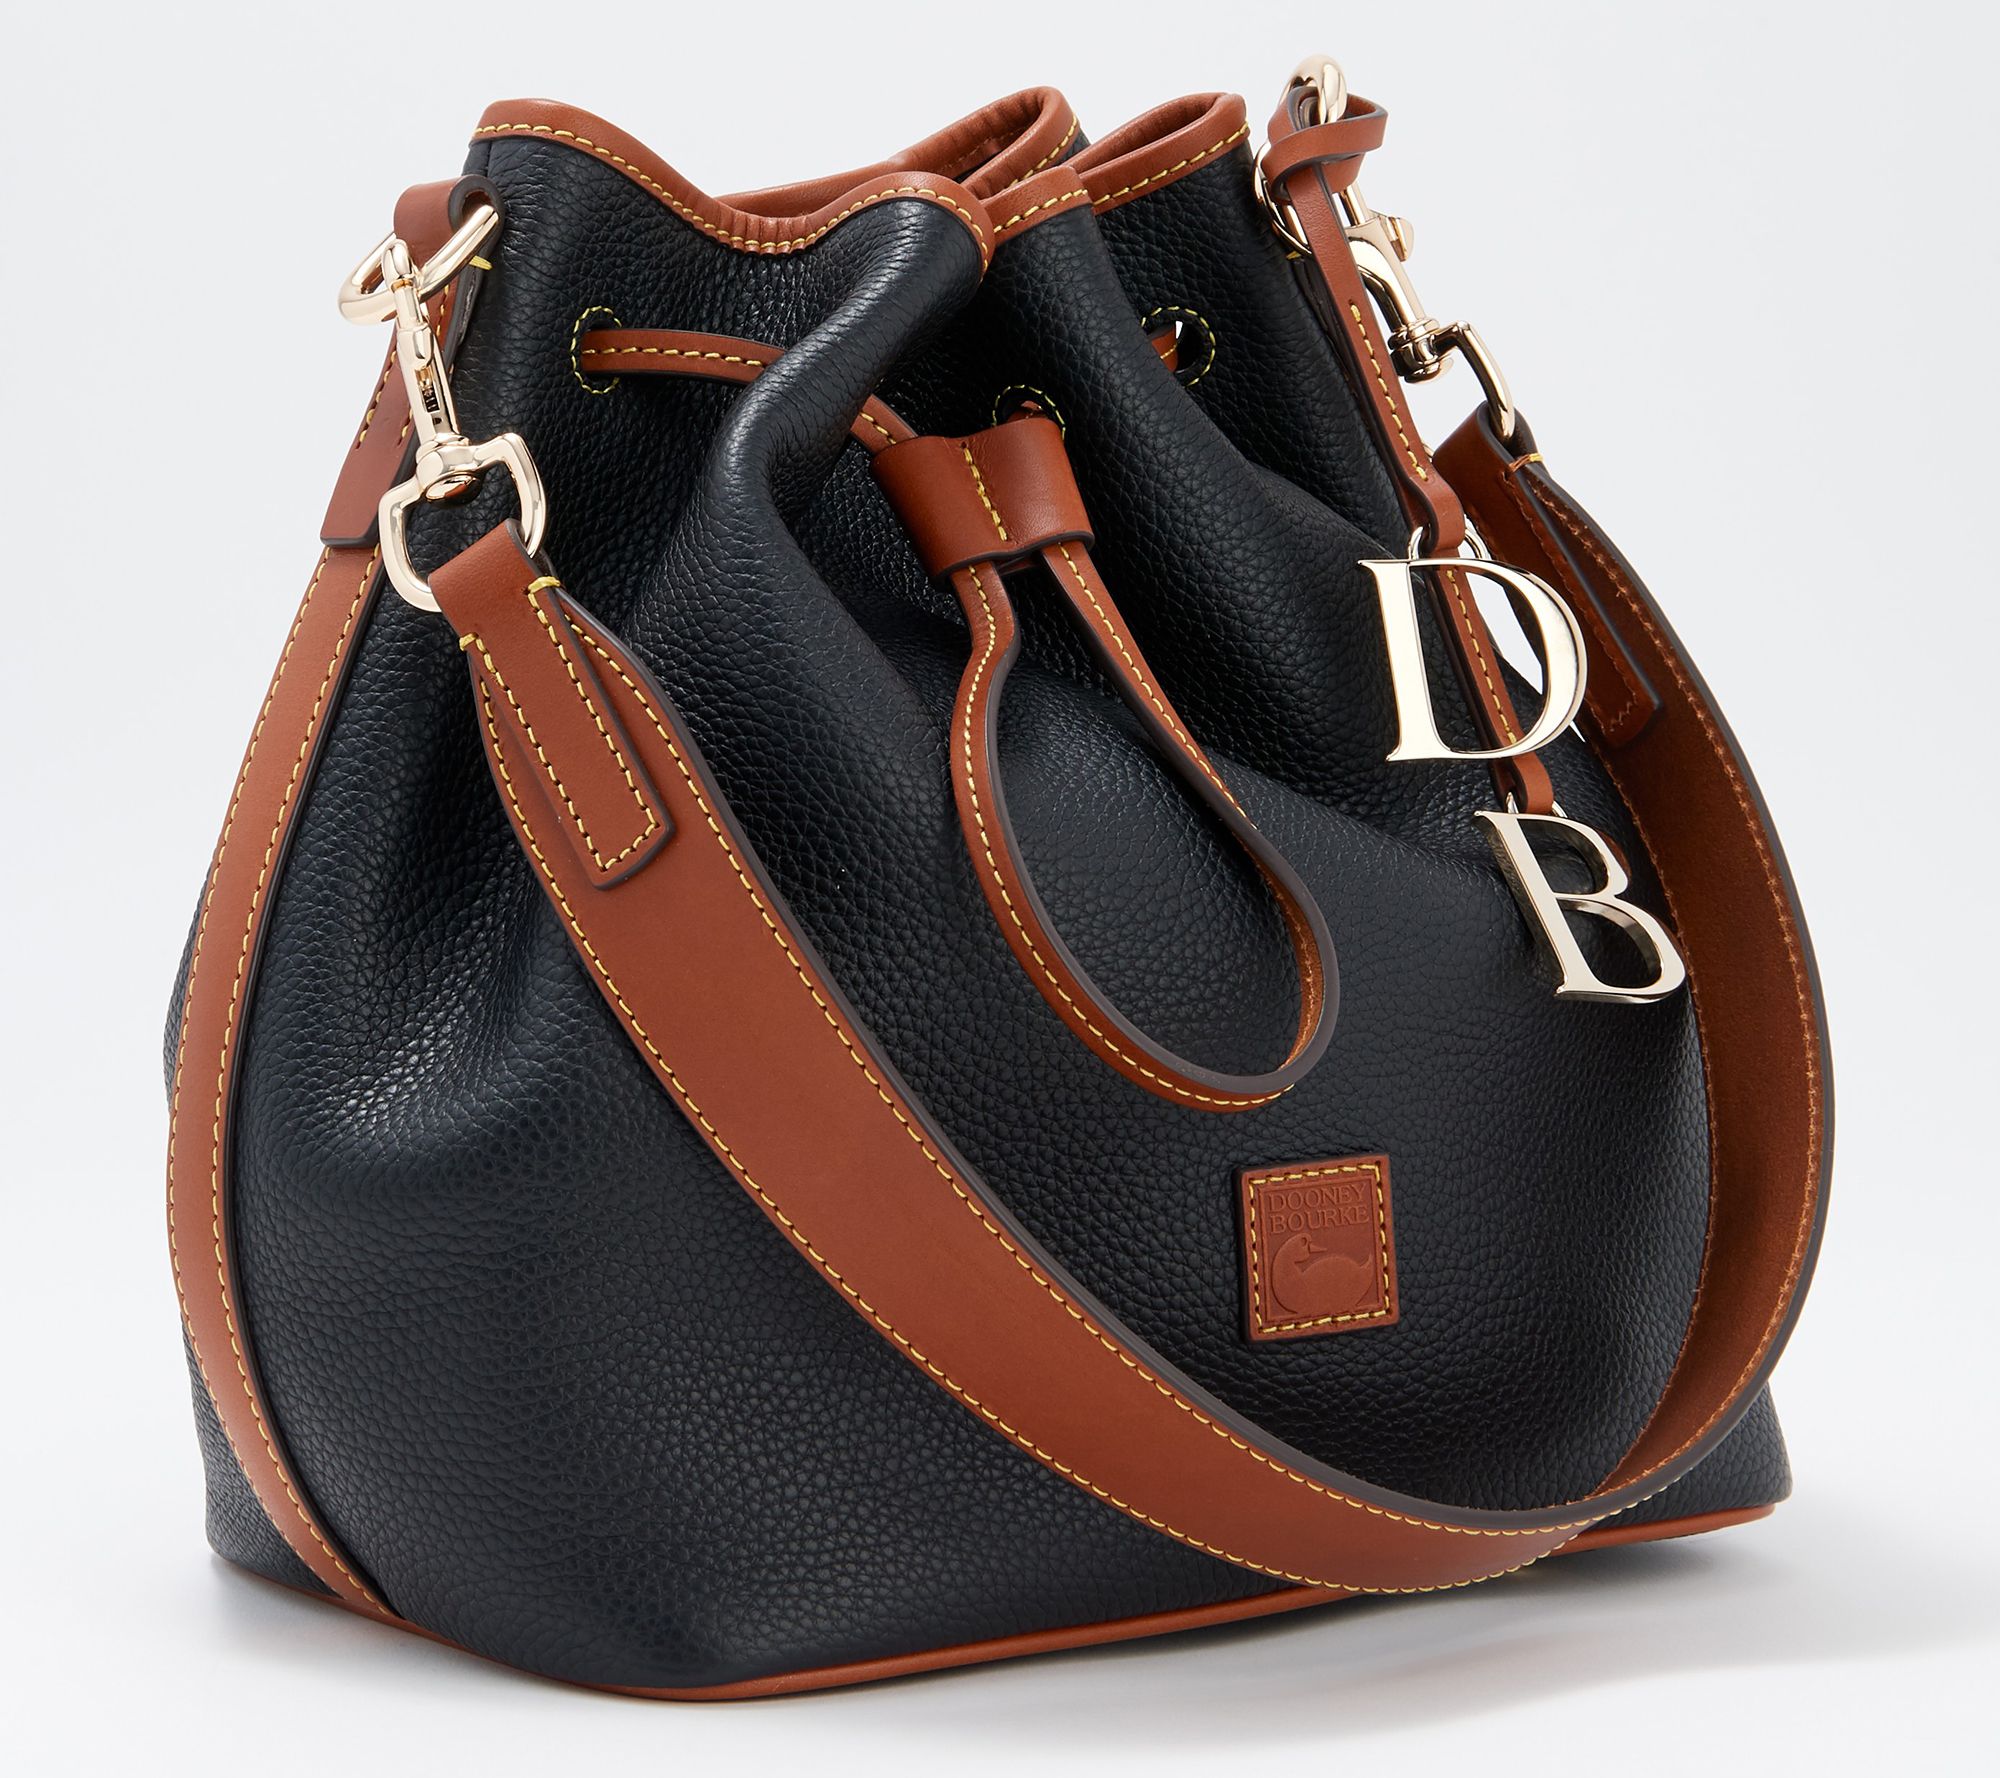 Dooney & Bourke Dillen Drawstring  Dooney, Leather drawstring bags,  Trending handbag